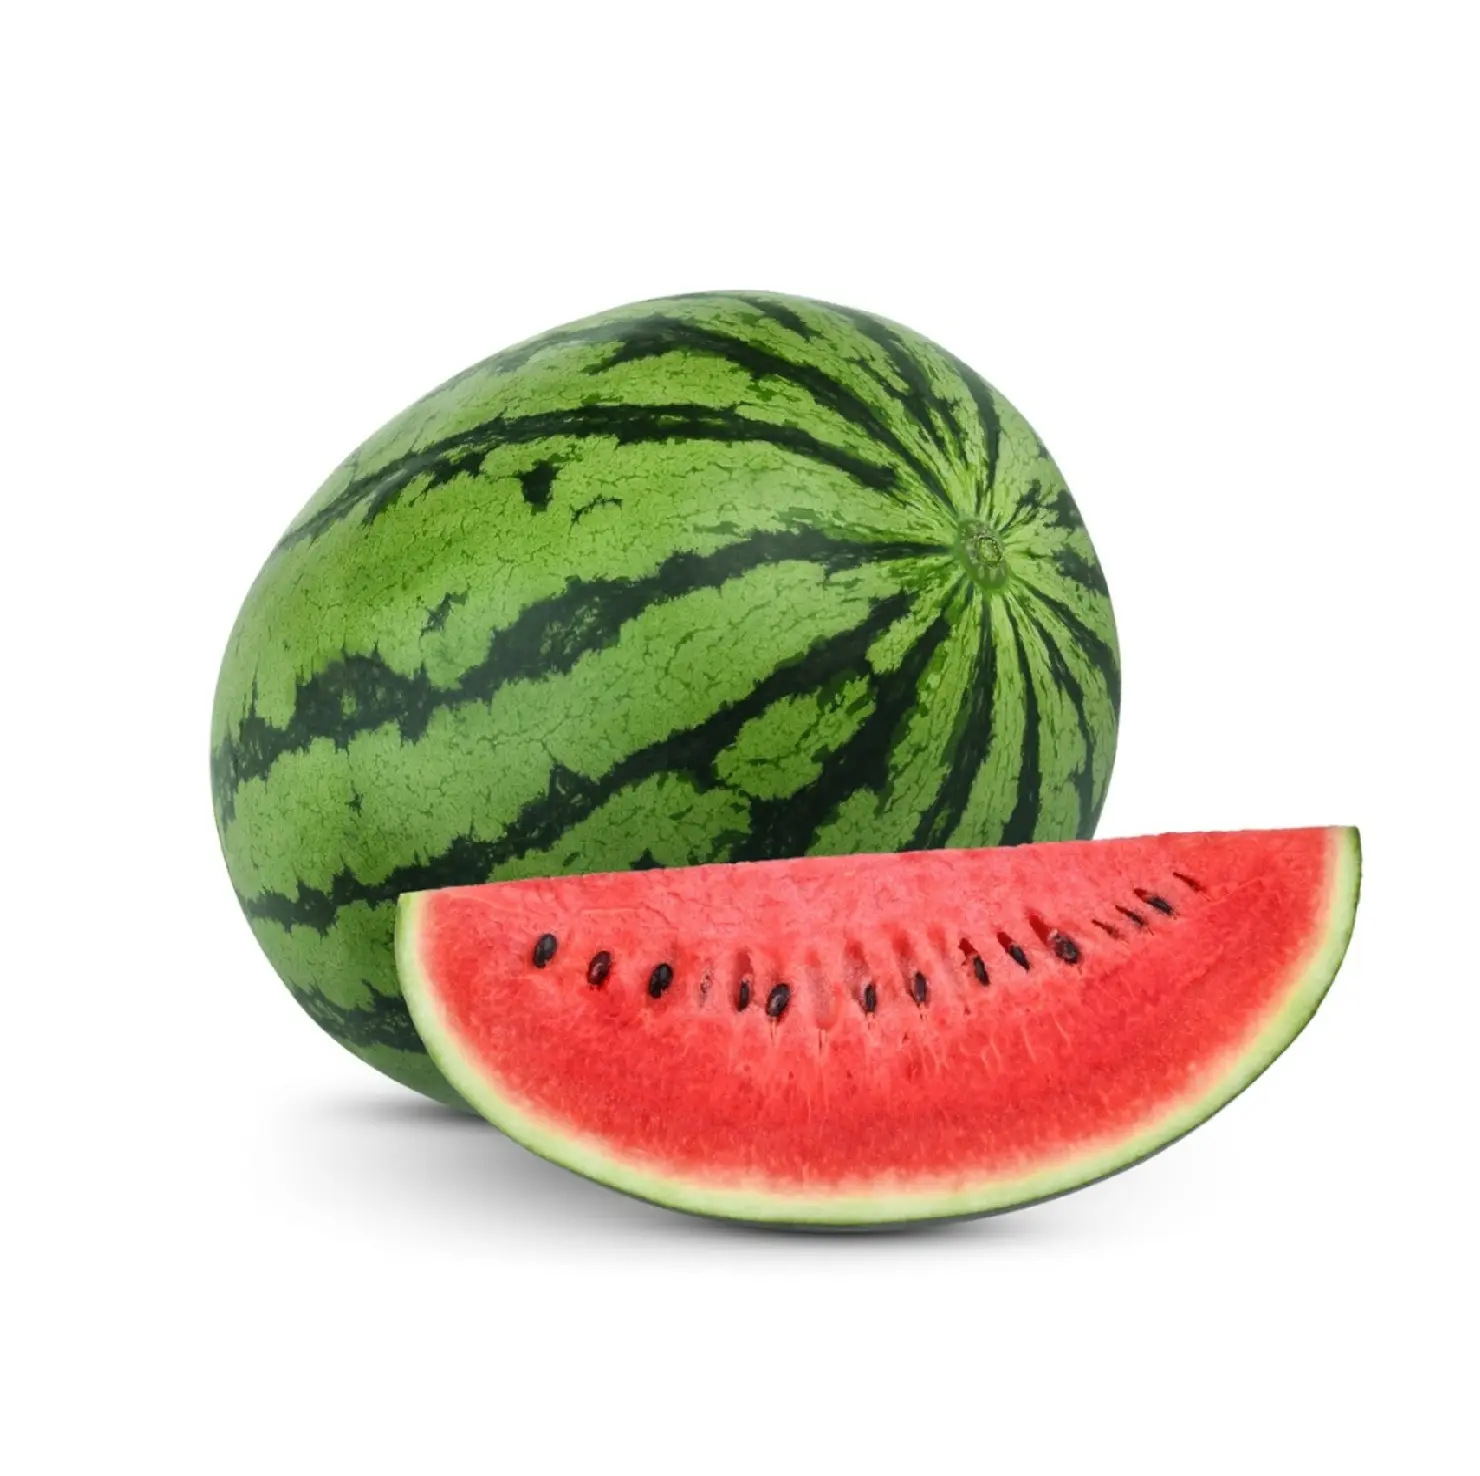 watermelon for sale